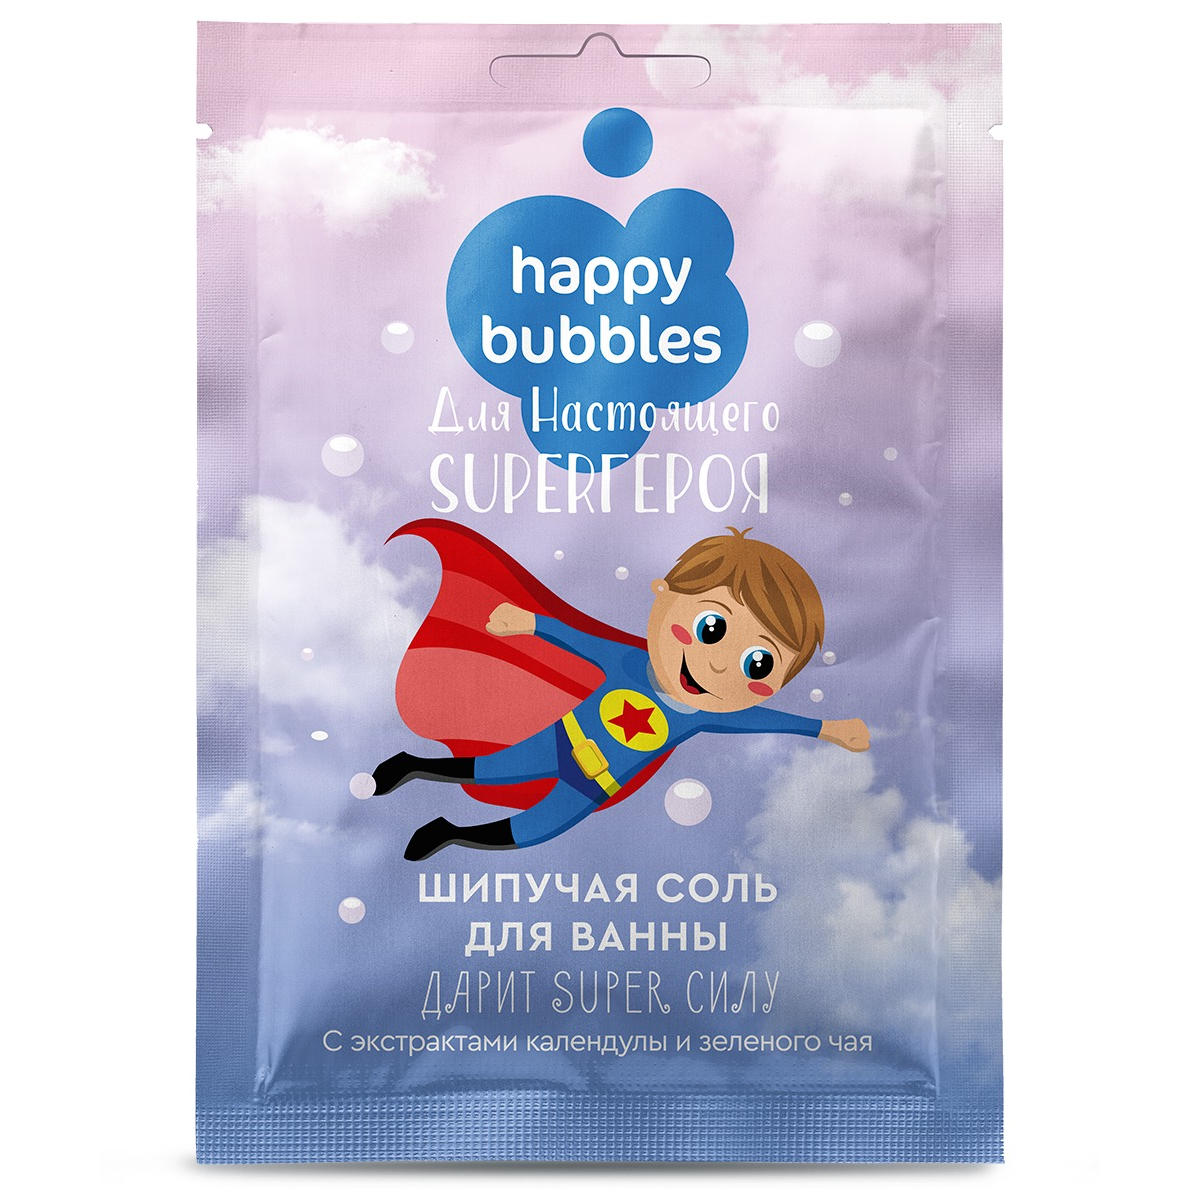 Соль для ванны Happy bubbles для настоя Super героя 100г соль шипучая для ванны antistress 100г кафе красоты